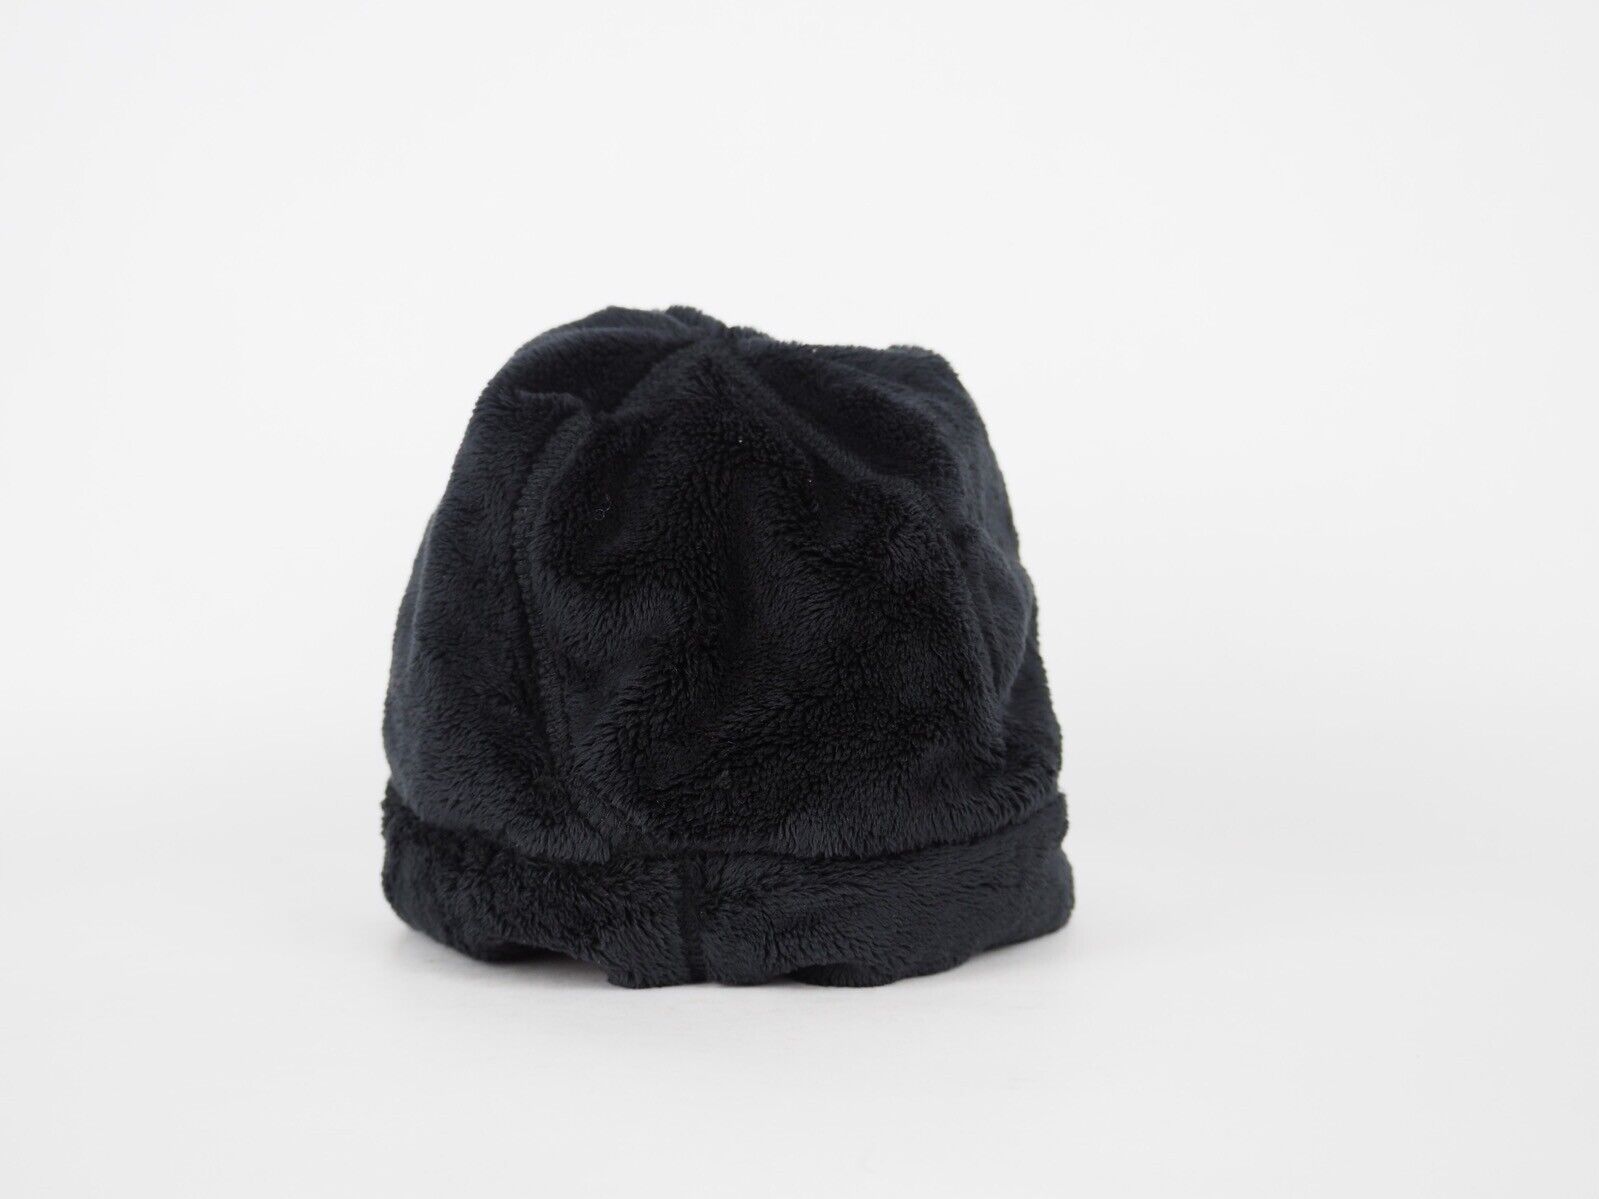 Girls Jack Wolfskin Soft Asylum 1901881 Black Furry Beanie Hat - London Top Style